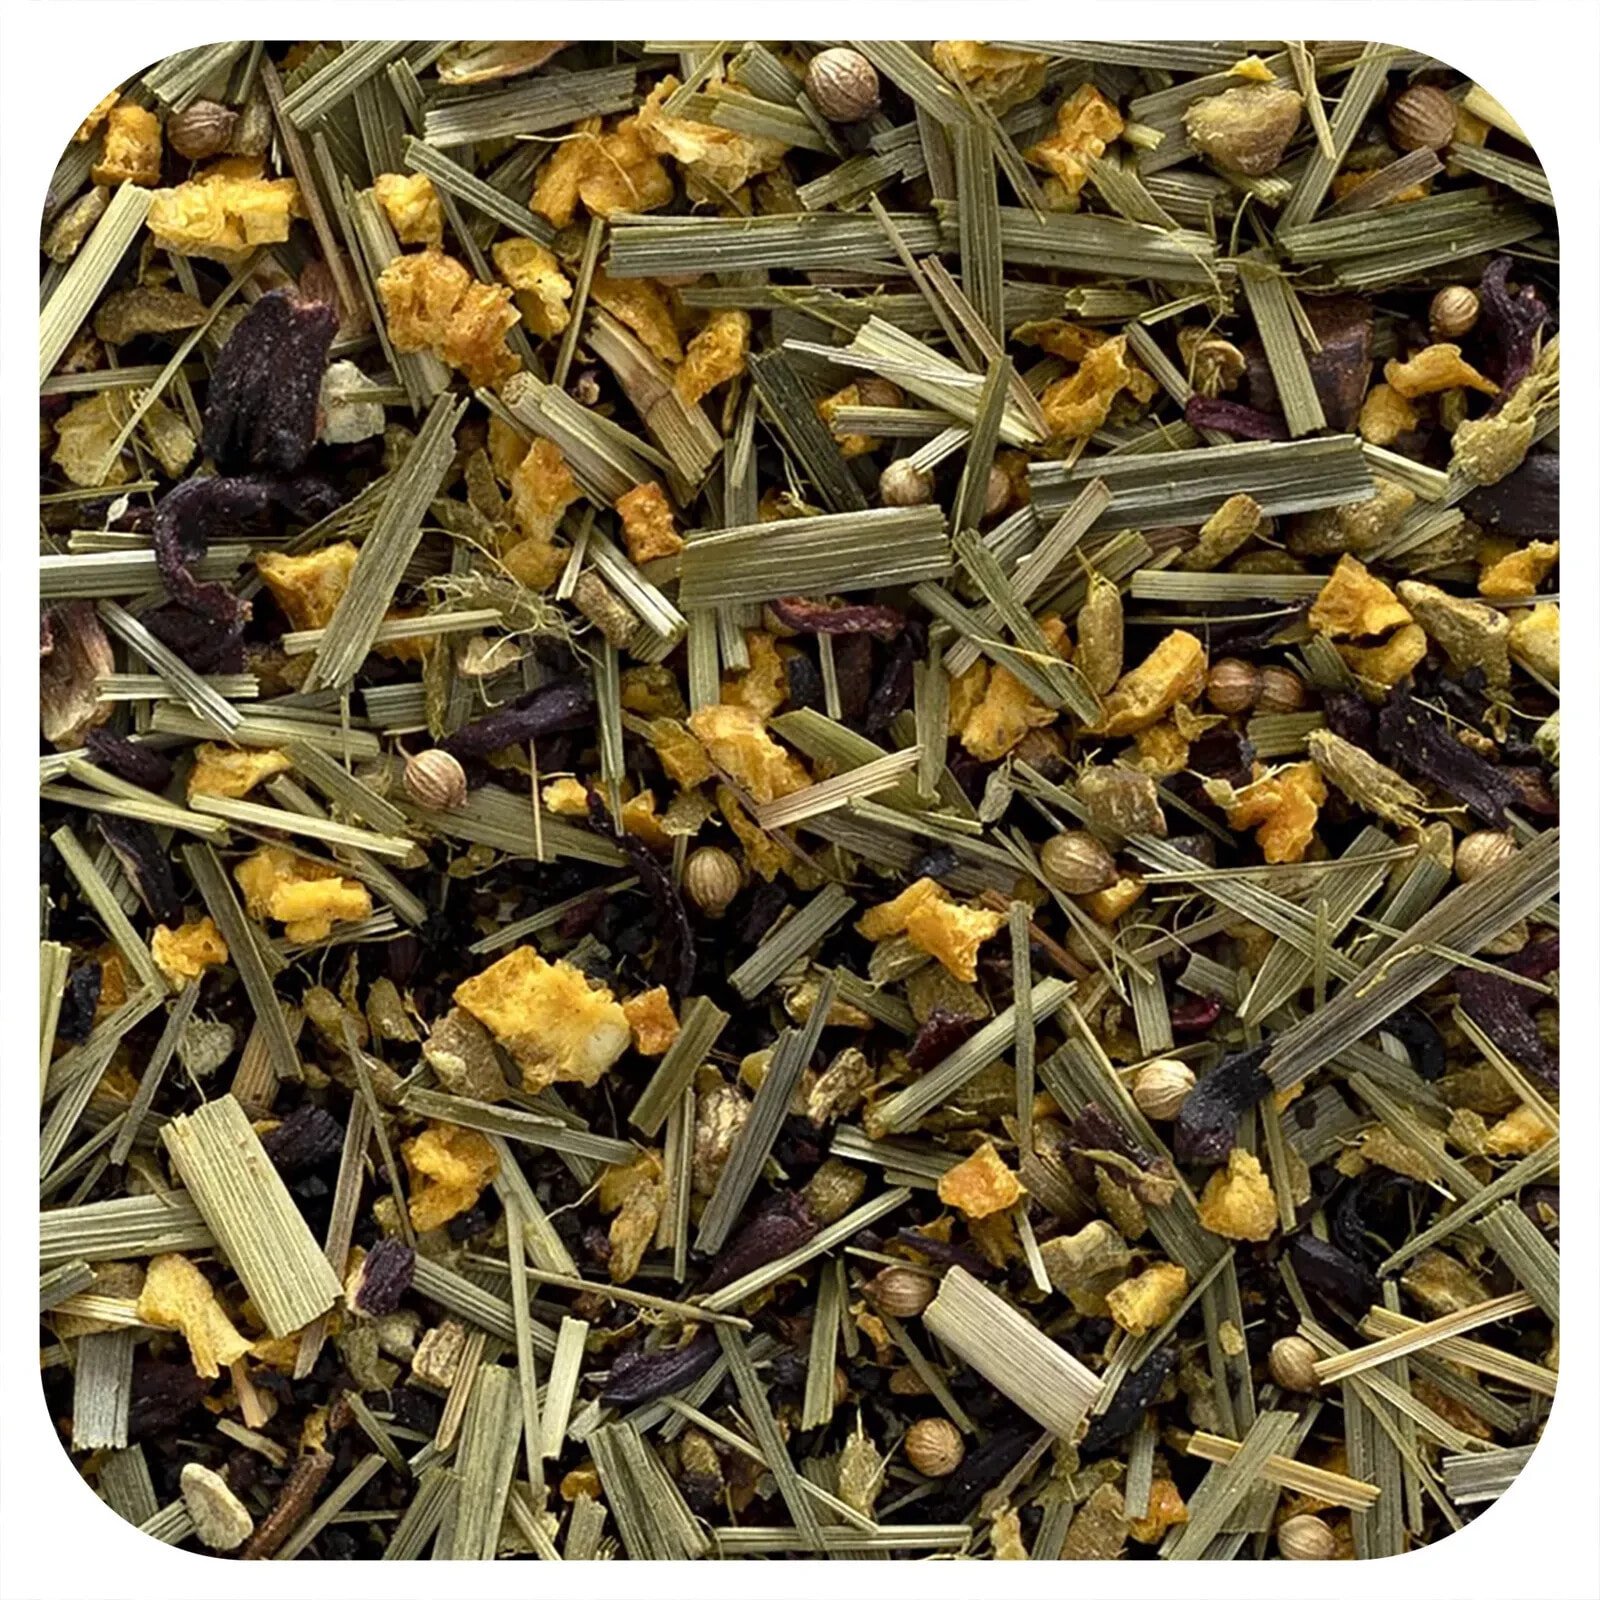 Jasmine Green Tea, 16 oz (453 g)